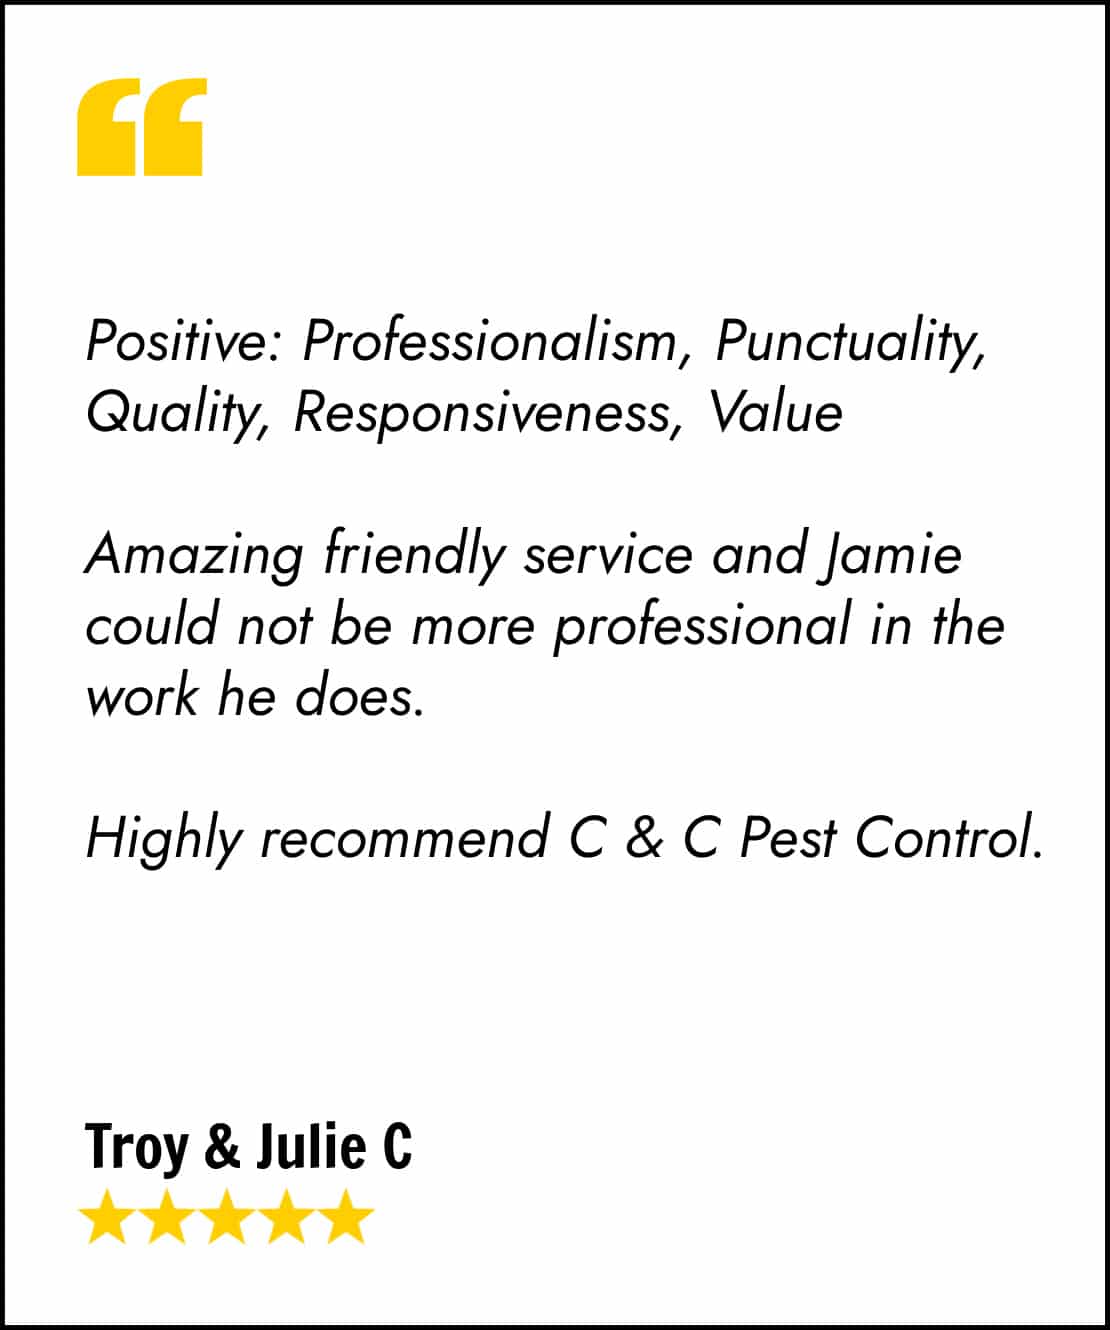 5 star C&C testimonial by Troy & Julie C